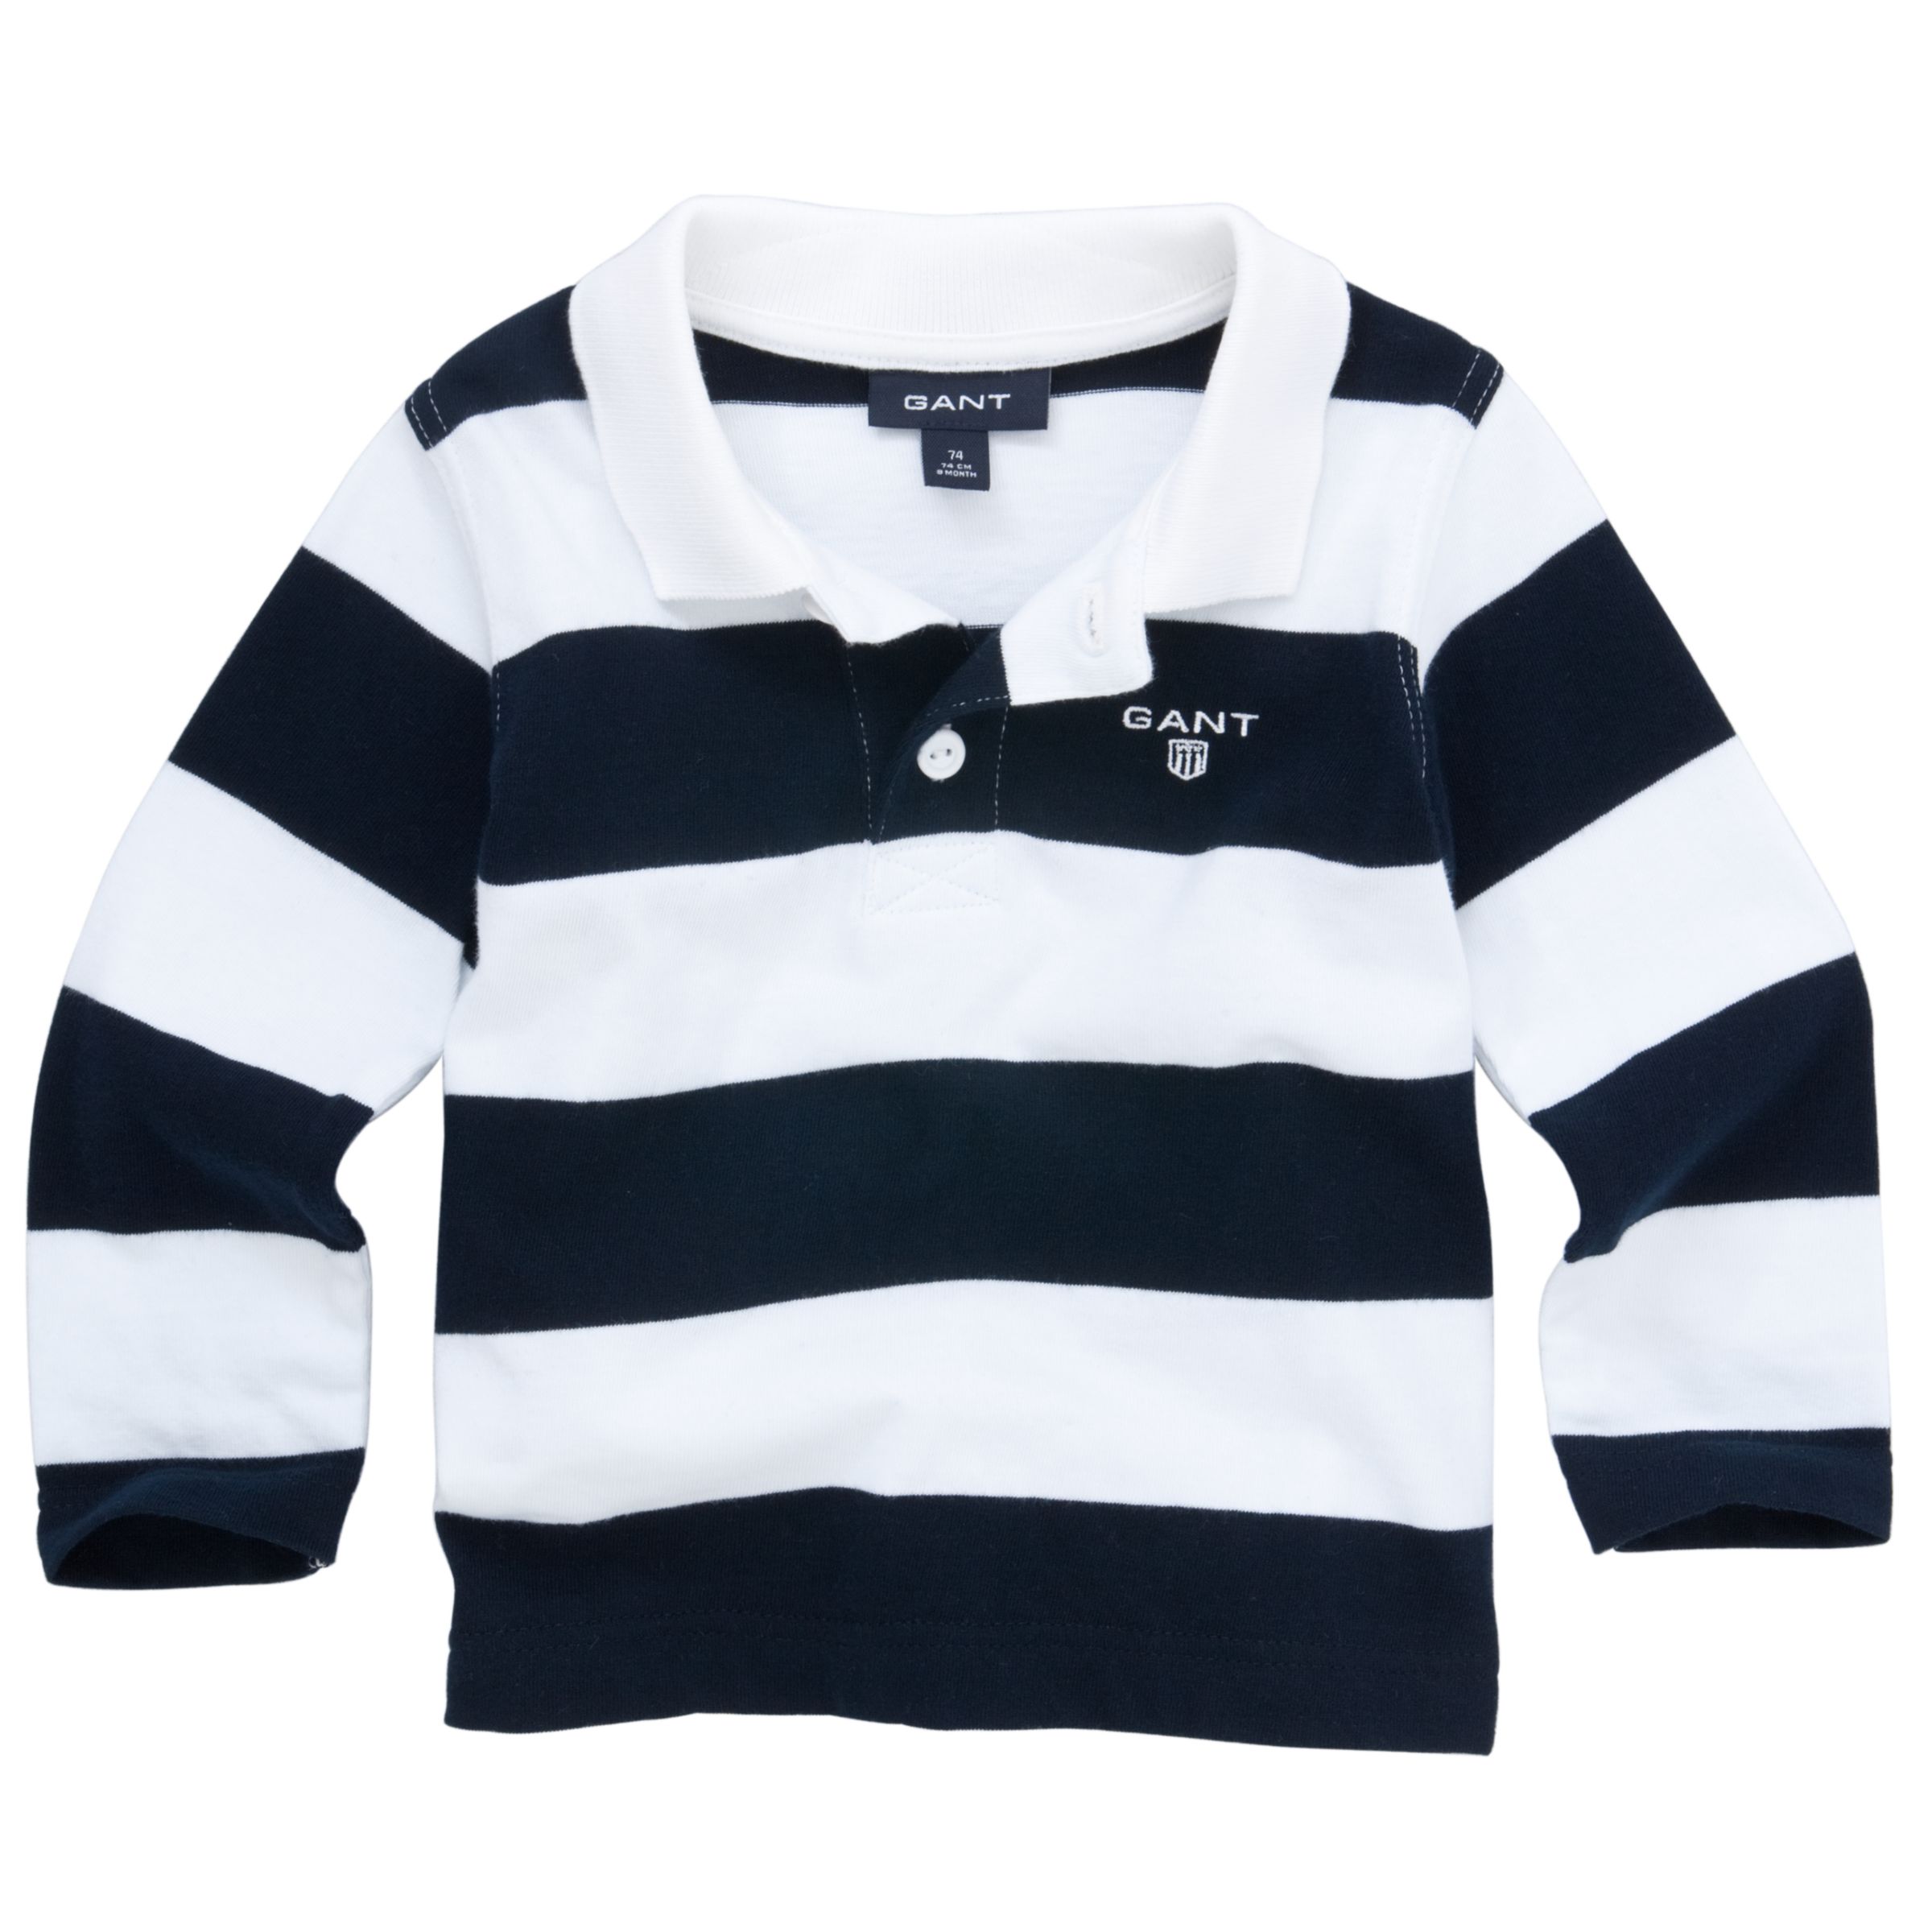 Stripe Print Rugby Shirt, Navy/White